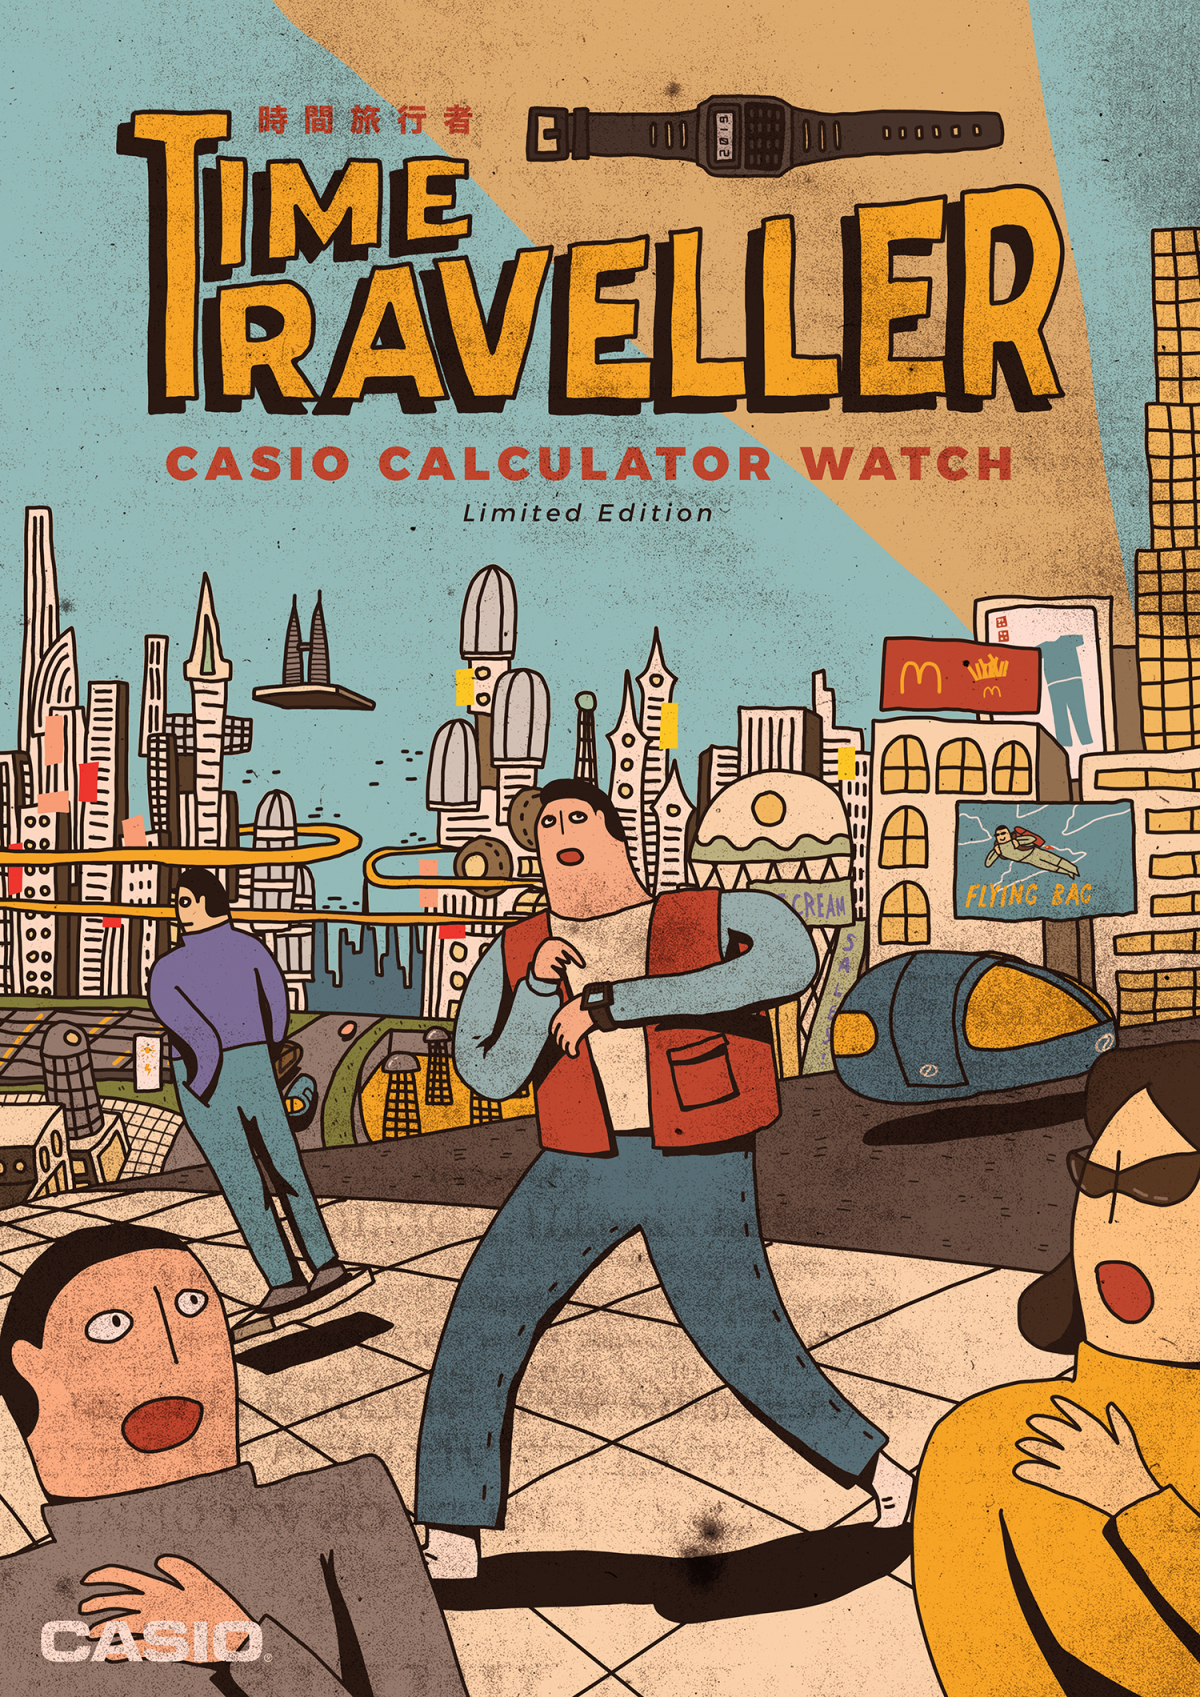 TIME TRAVELLER CASIO Calculator Watch Poster 2.jpg